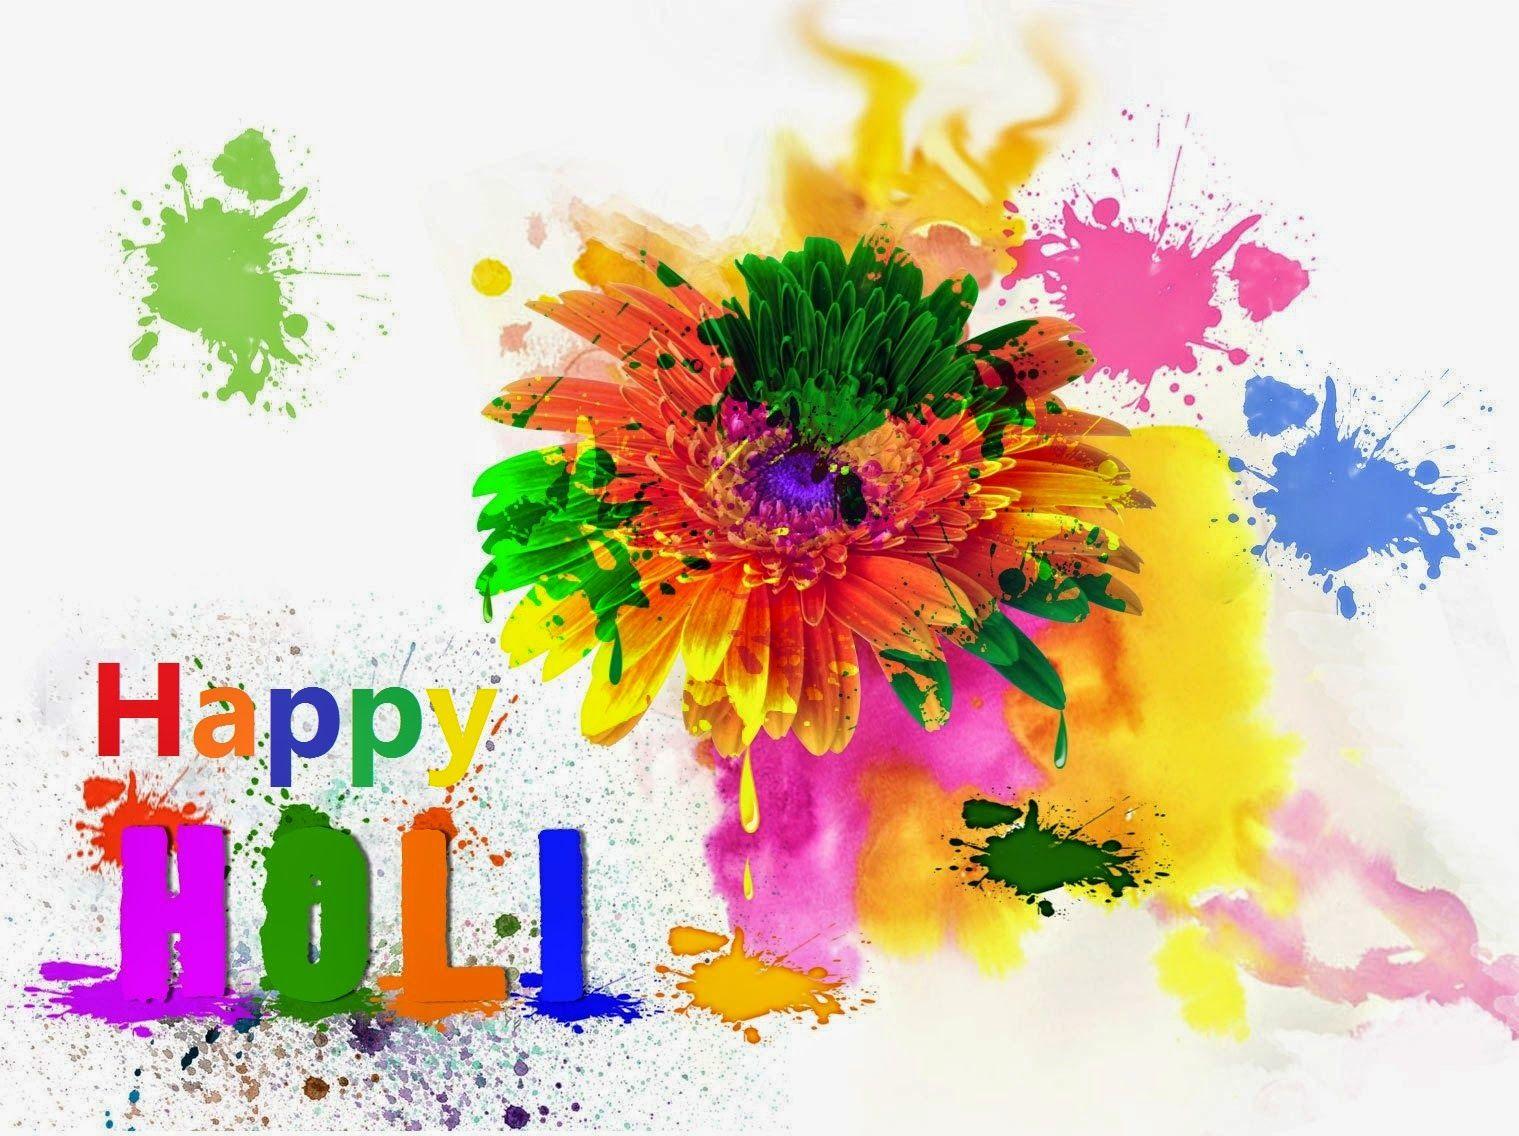 Happy holi free wallpaper, Happy holi full HD wallpaper, Download free holi wallpaper. Hap. Happy holi wishes, Happy holi wallpaper, Holi wishes